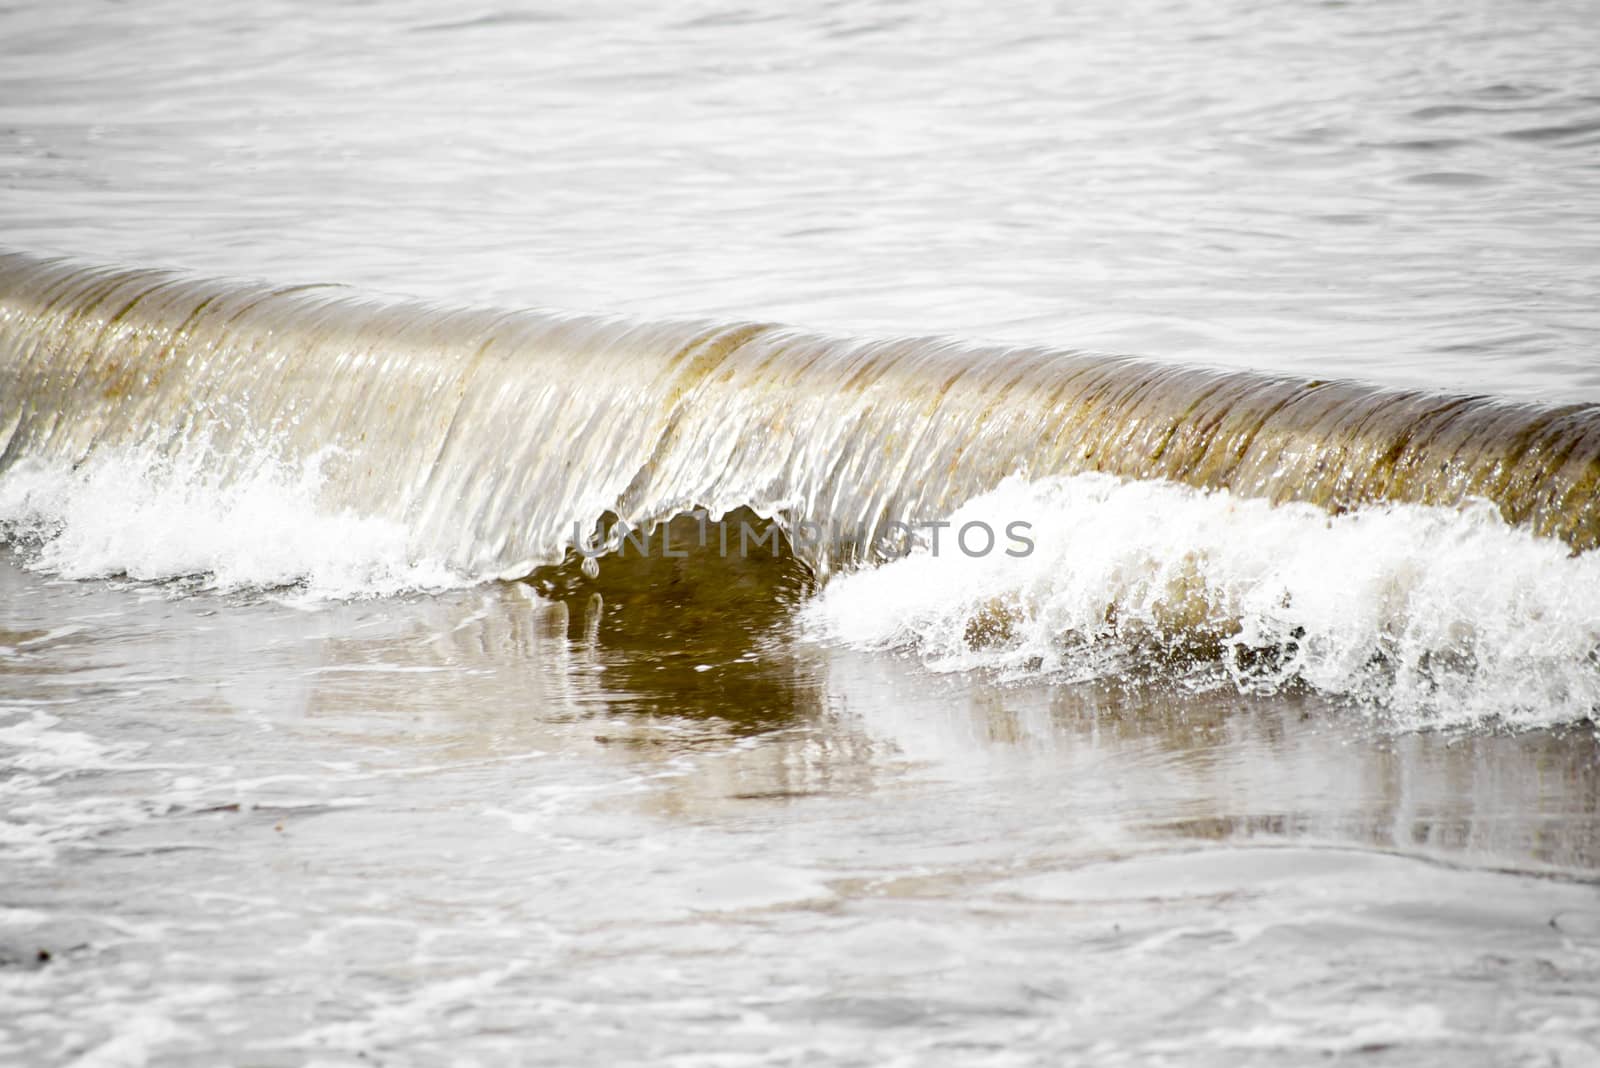 crisp waves lashing onto ballybunion beach in county kerry ireland